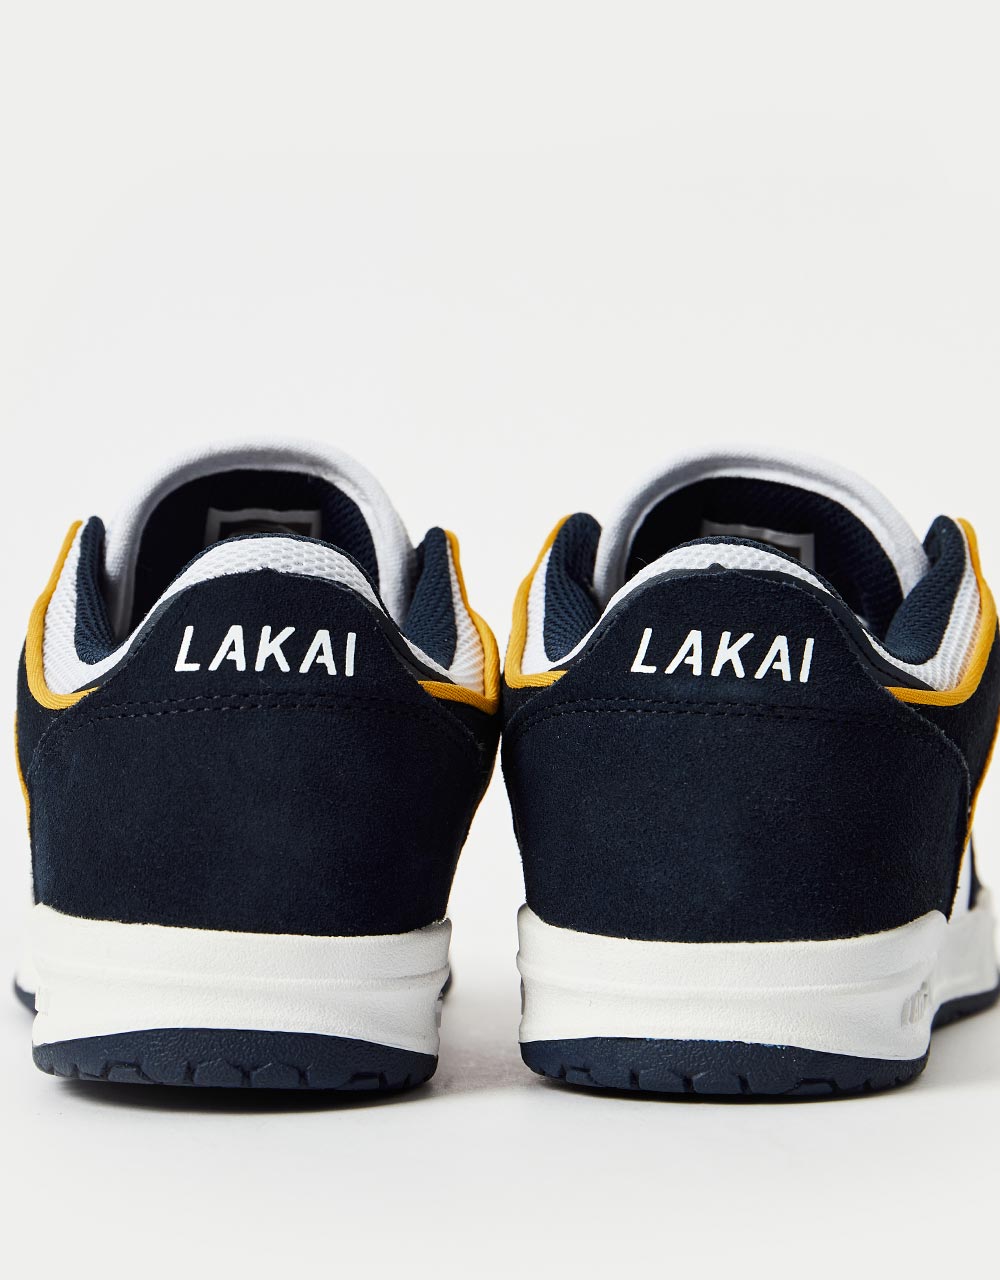 Lakai Telford Low Skate Shoes - Navy/White Suede